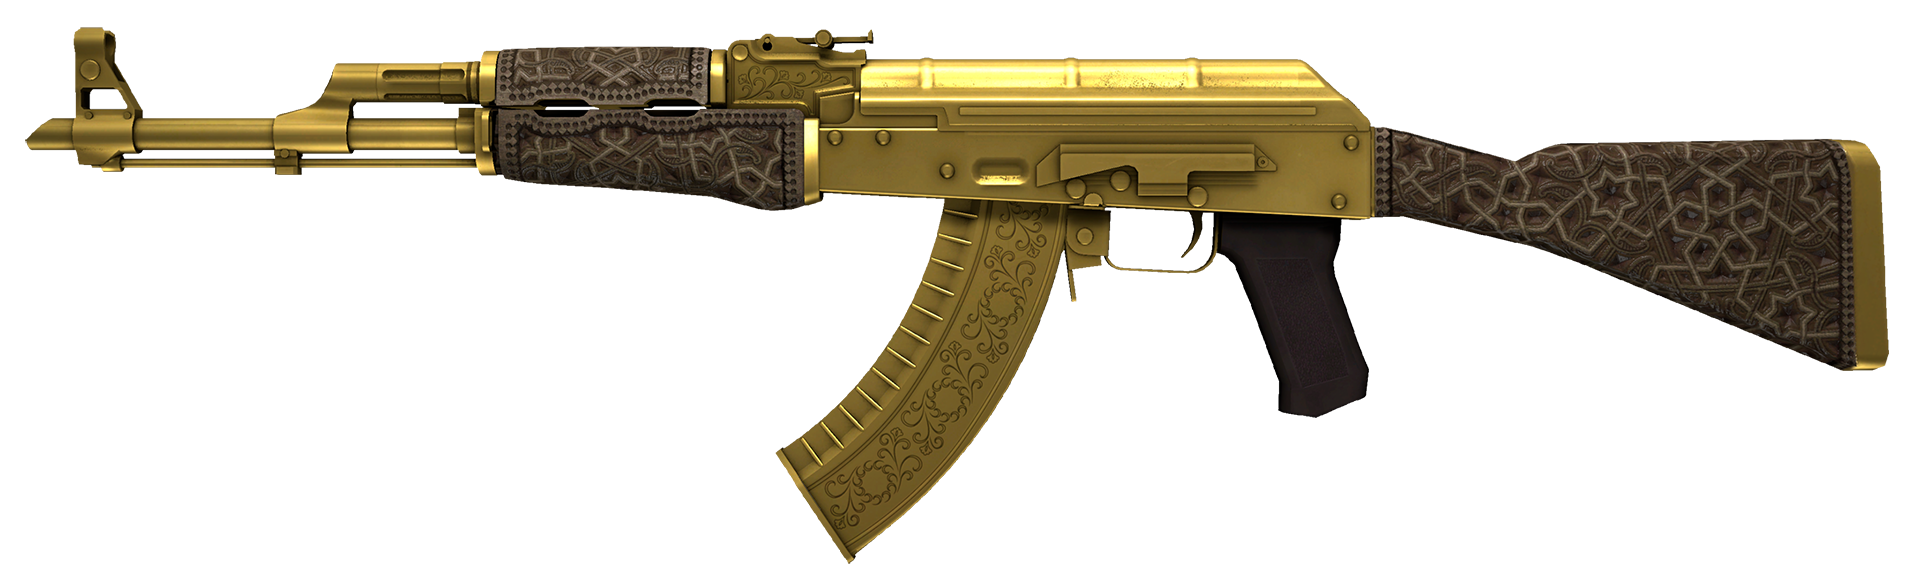 AK-47 Gold Arabesque Large Rendering